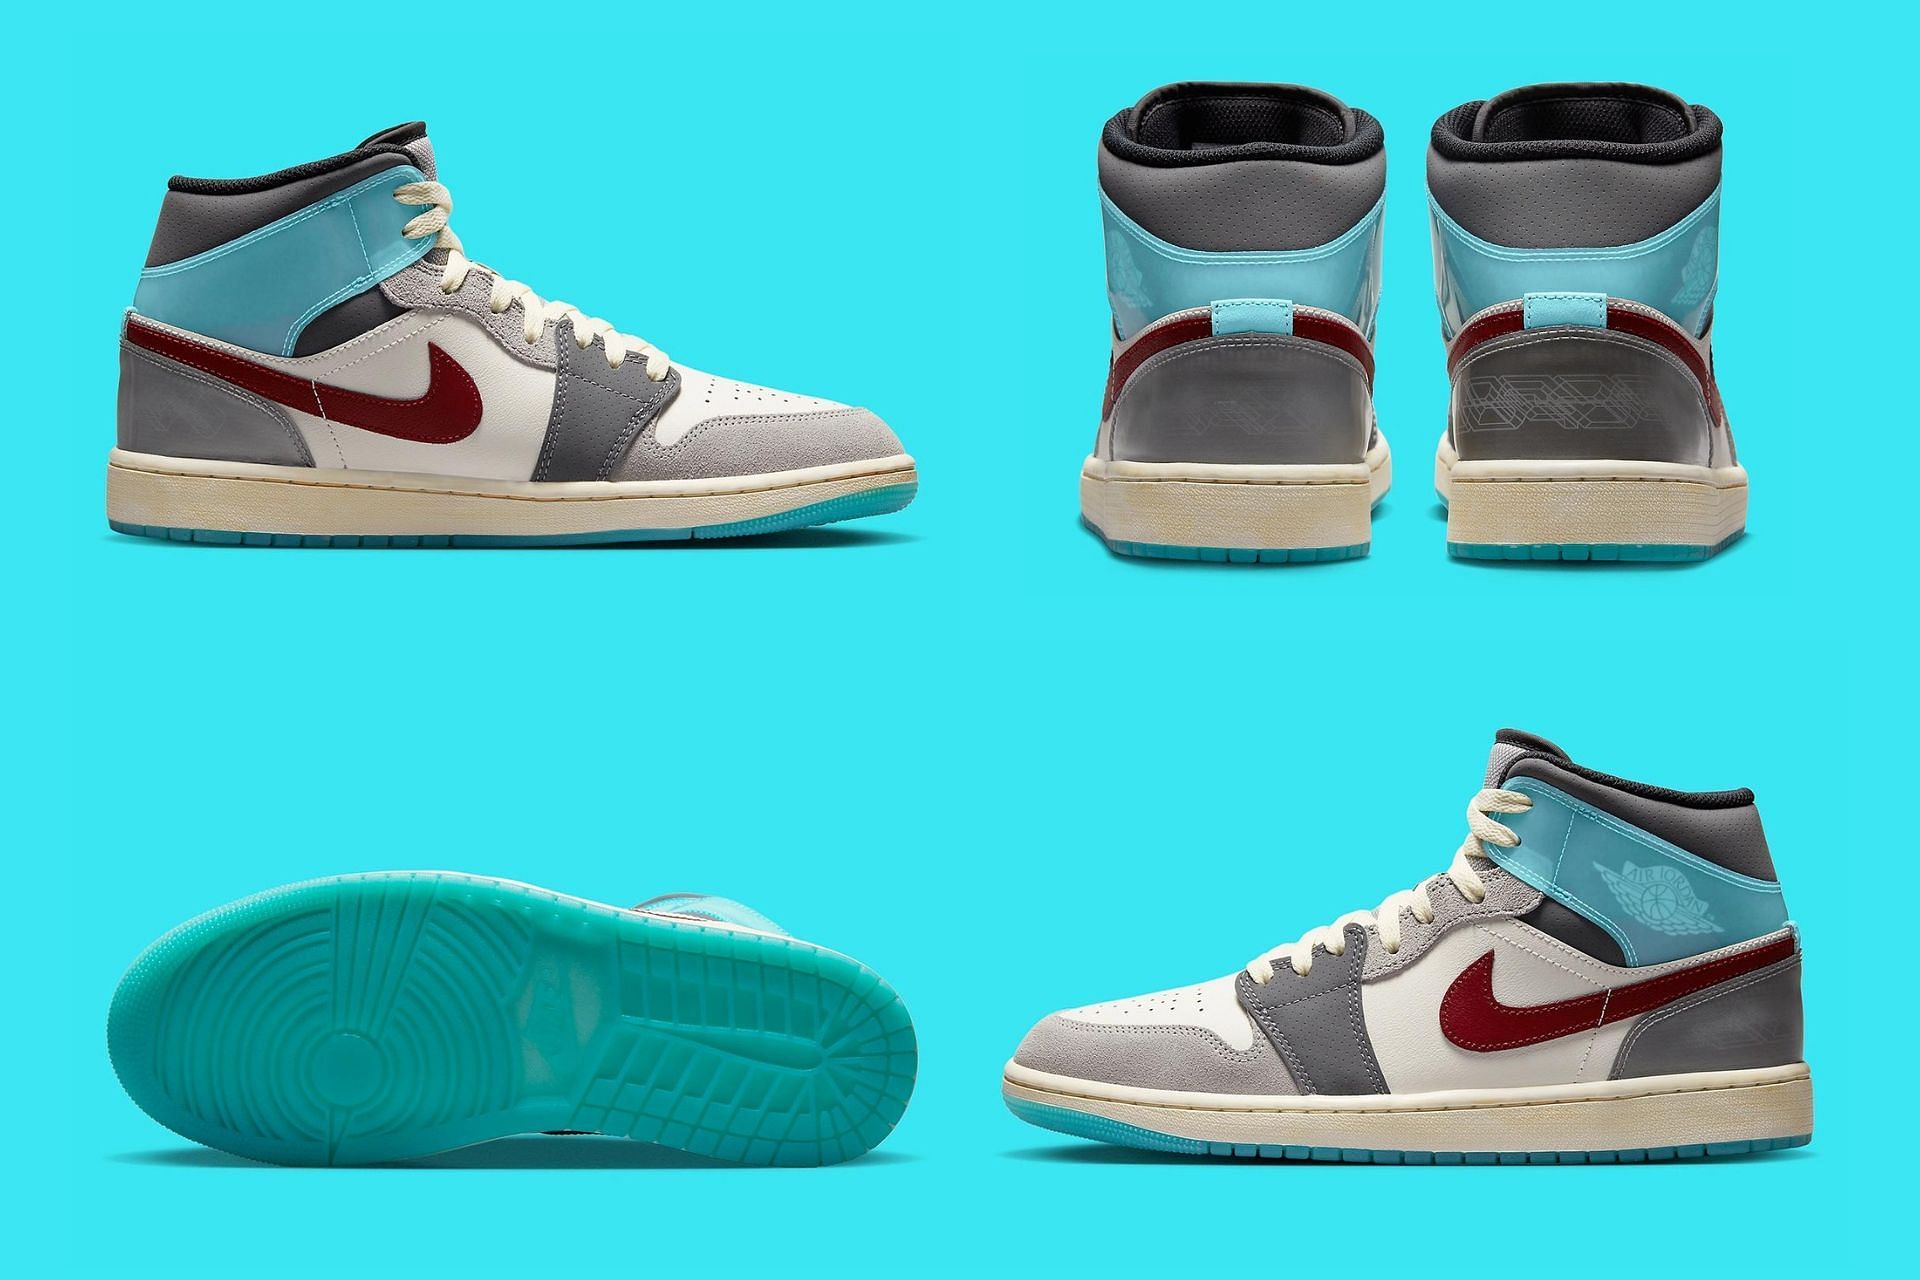 Upcoming astronomy-themed Nike Air Jordan 1 Mid Exploration Unit sneakers (Image via Sportskeeda)